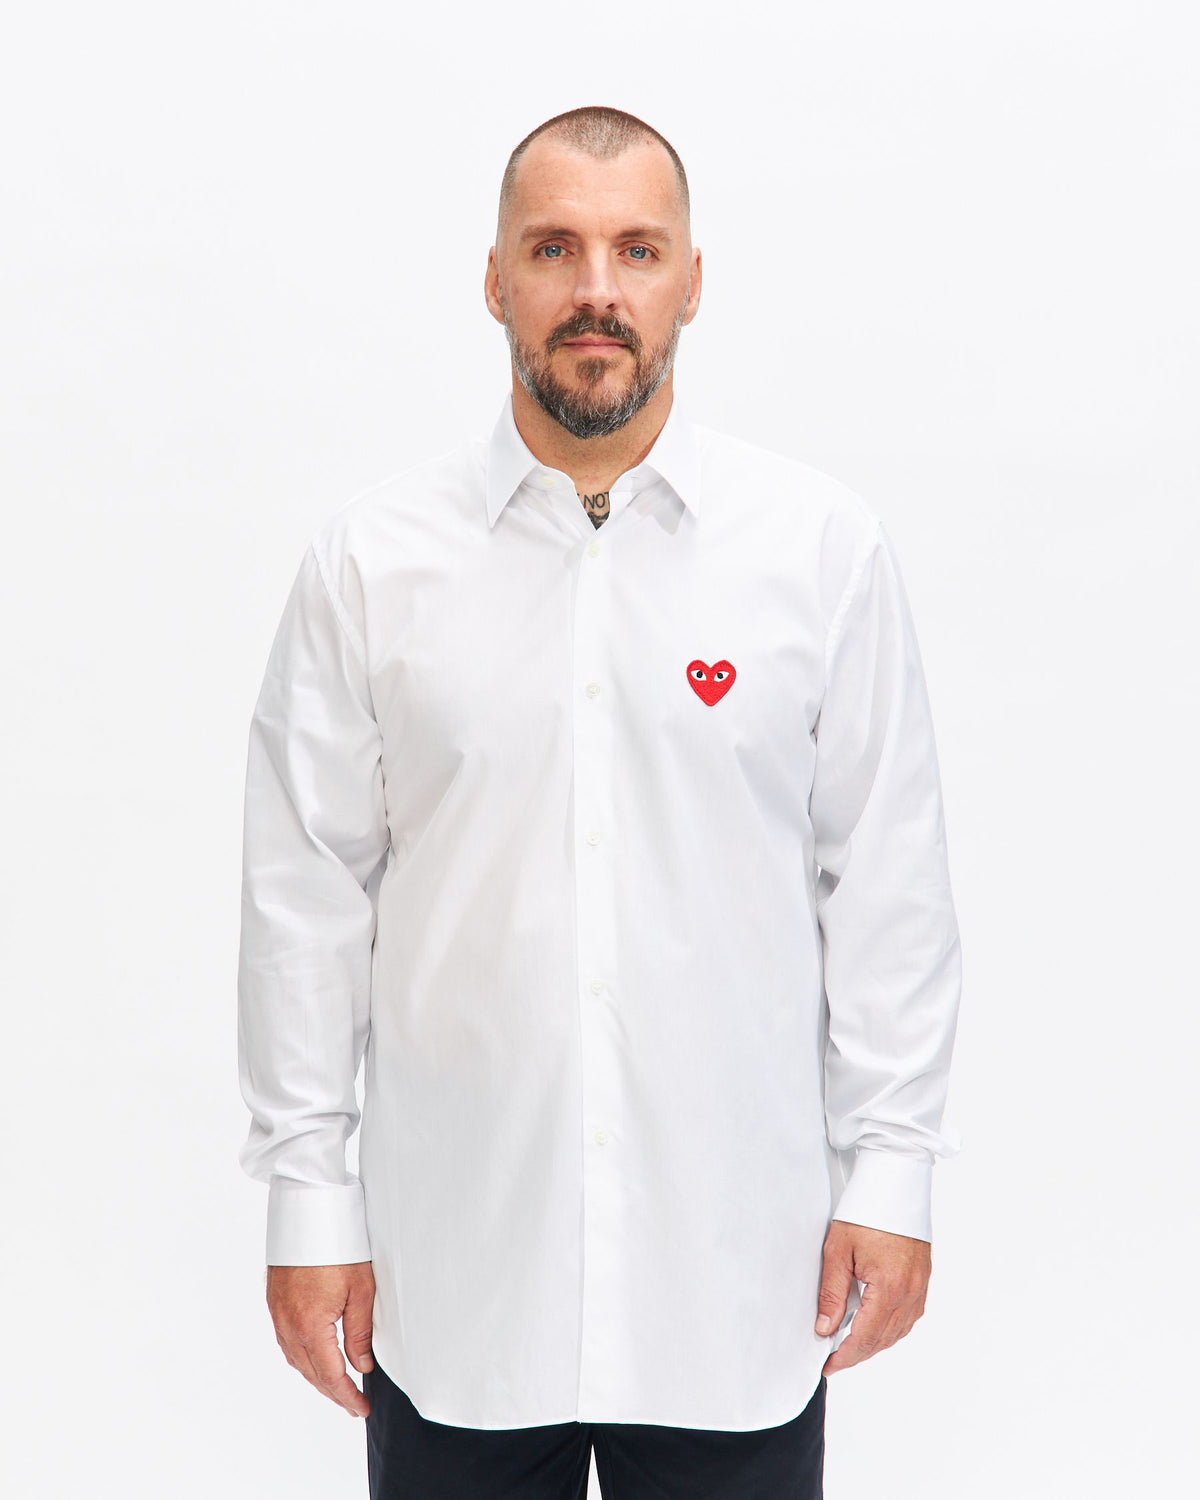 Heart Shirt in White